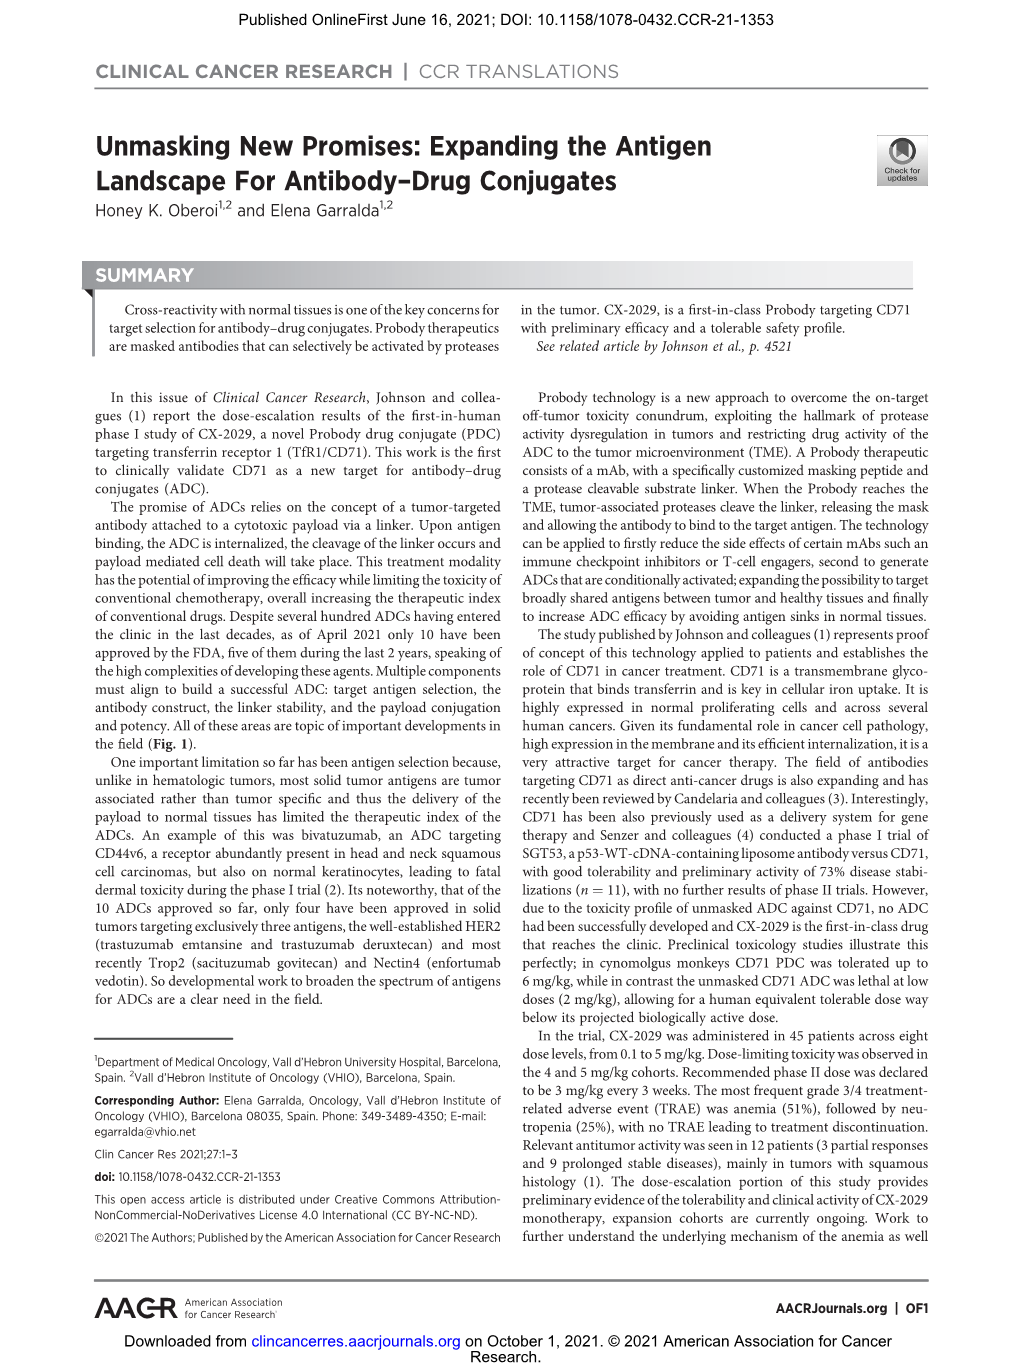 Expanding the Antigen Landscape for Antibody–Drug Conjugates Honey K